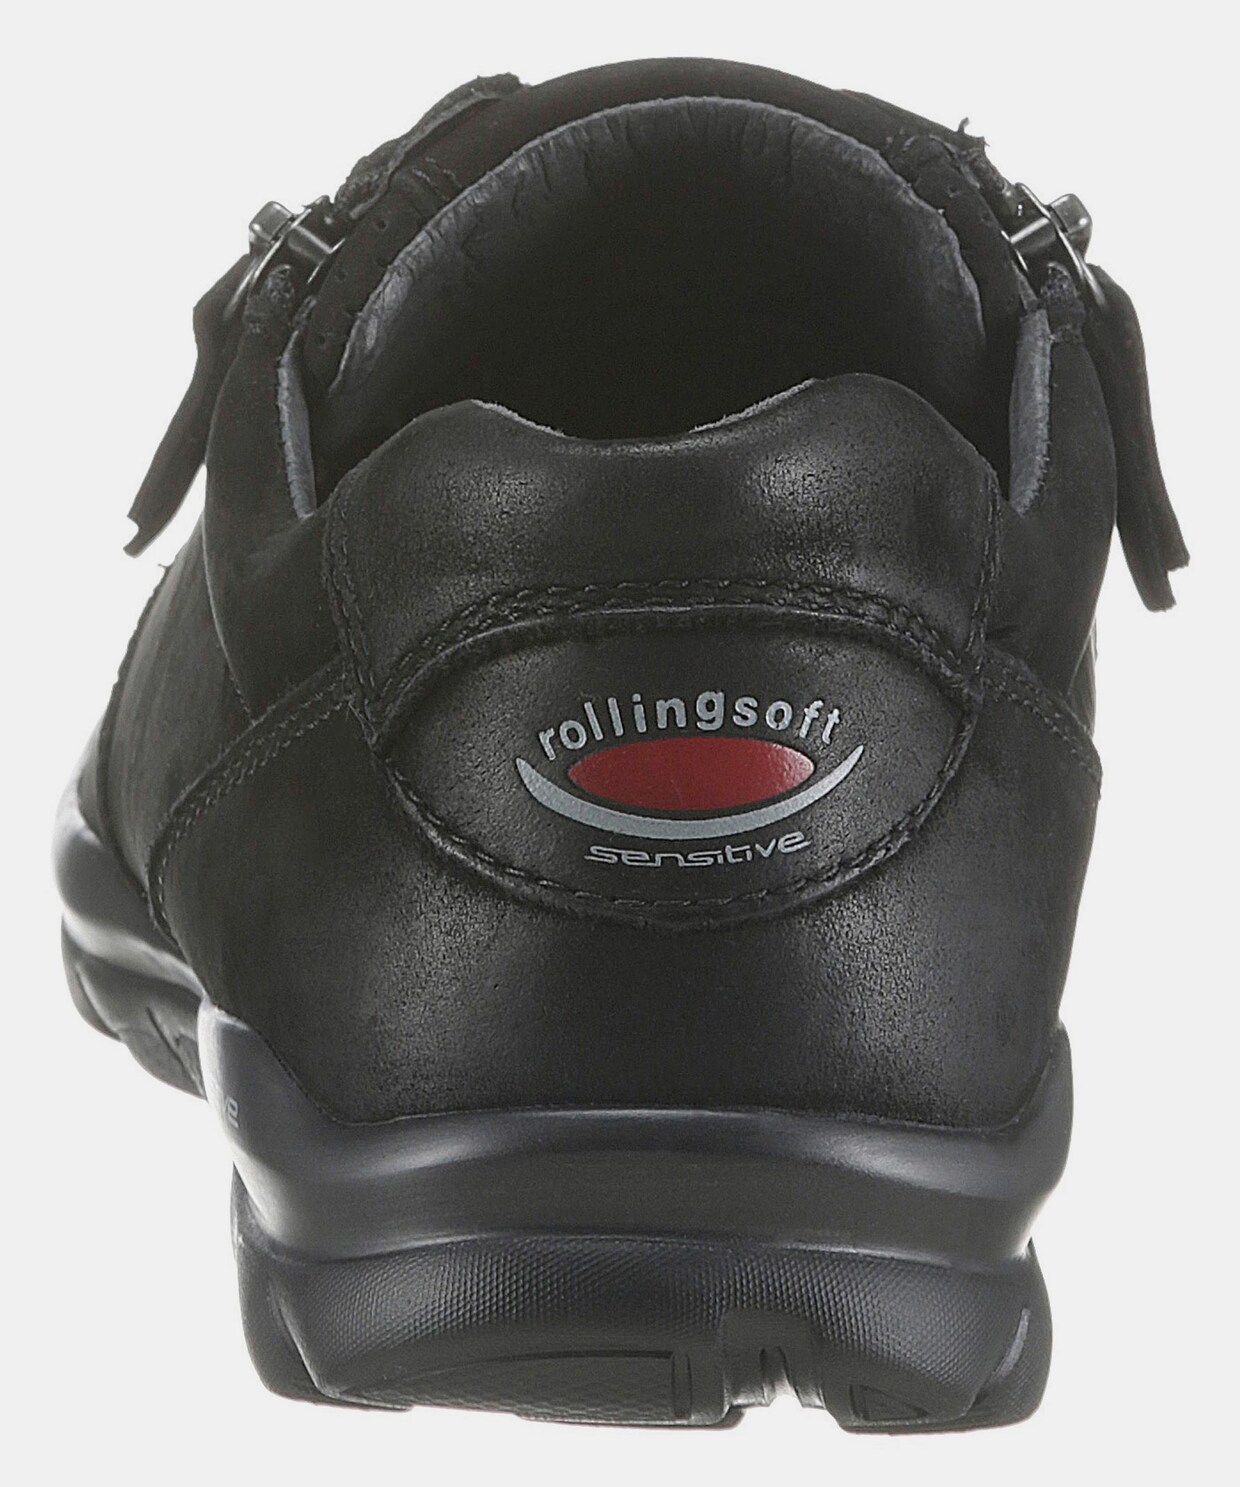 Gabor Rollingsoft Keilsneaker - schwarz